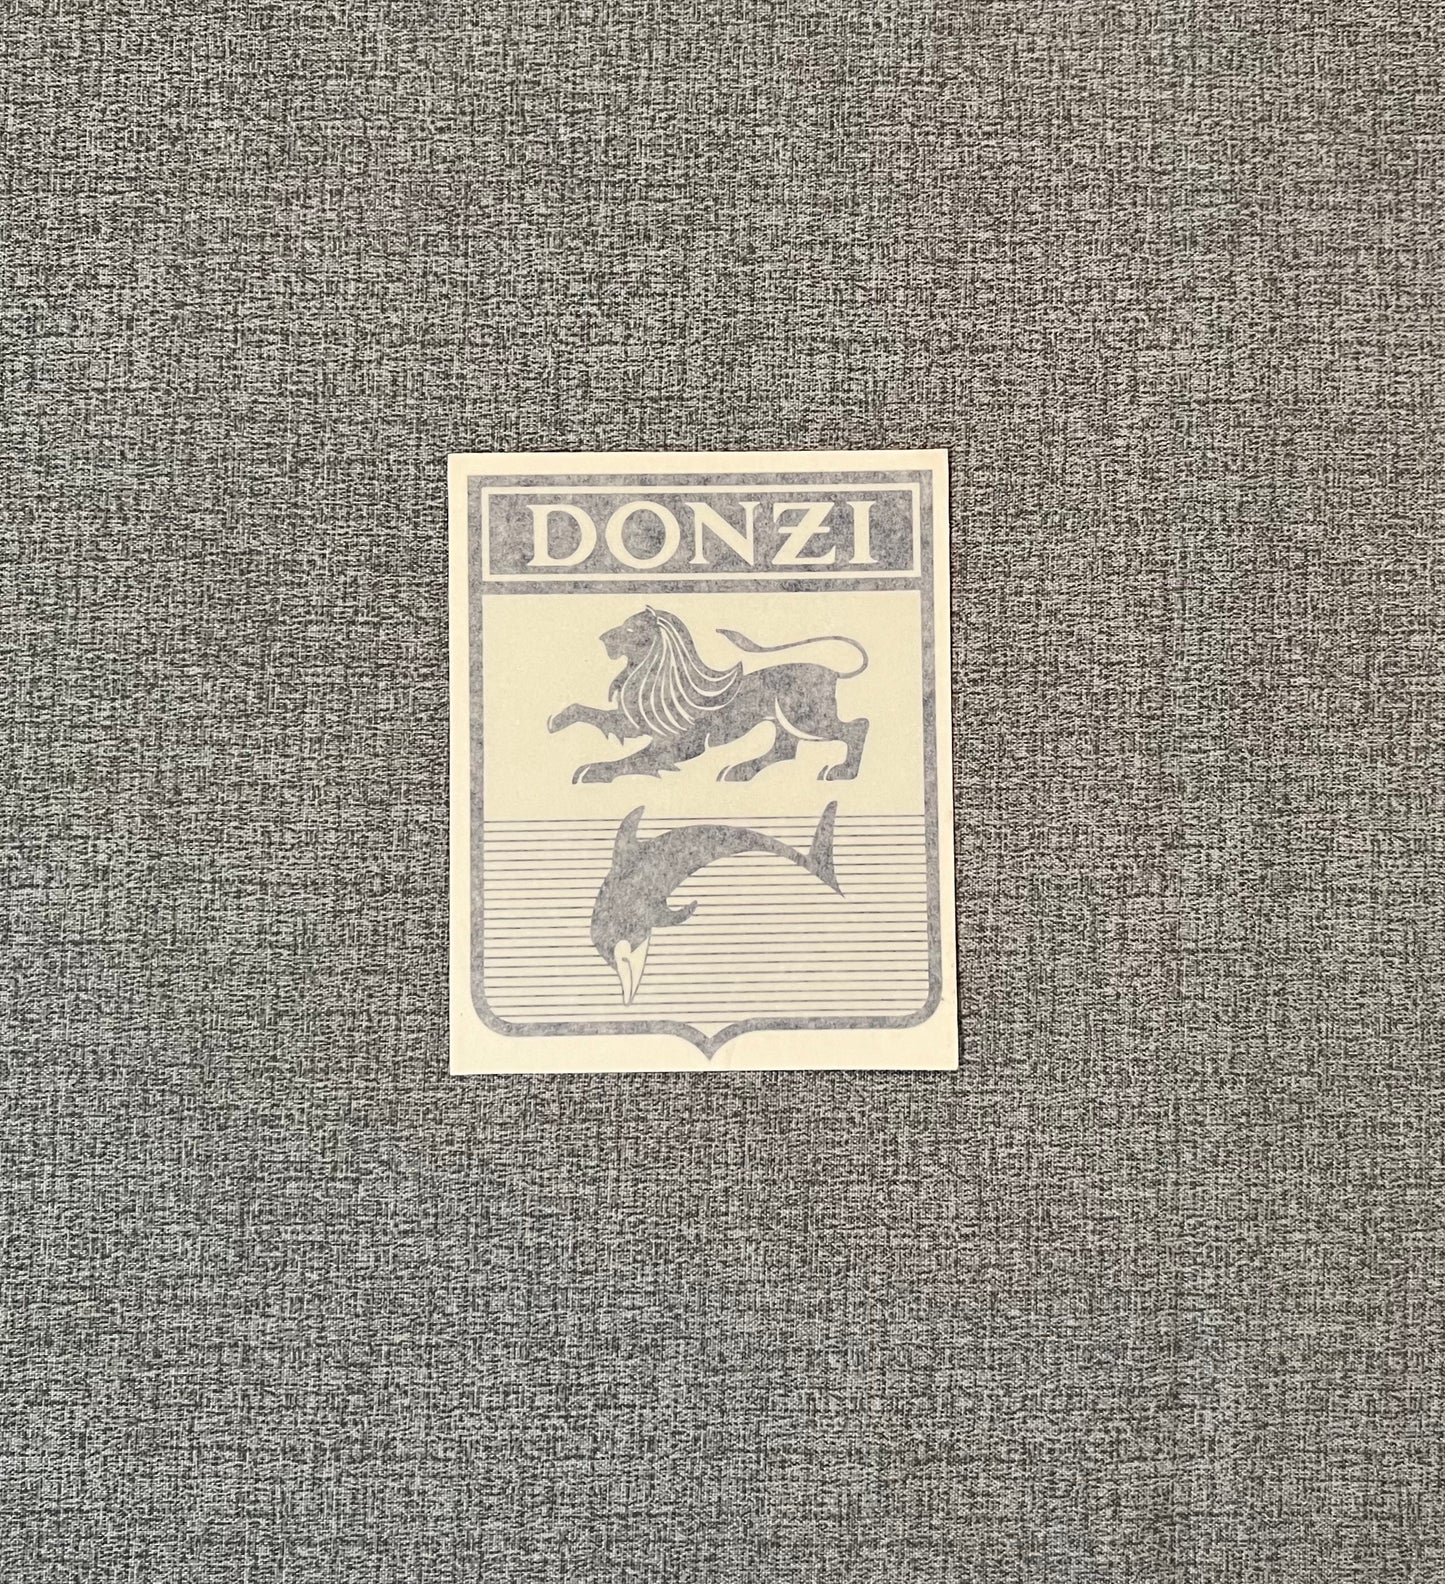 Donzi OEM Hullside Decal Logo - Lion Dolphin Shield Chrome / Blue, 6 5/8”